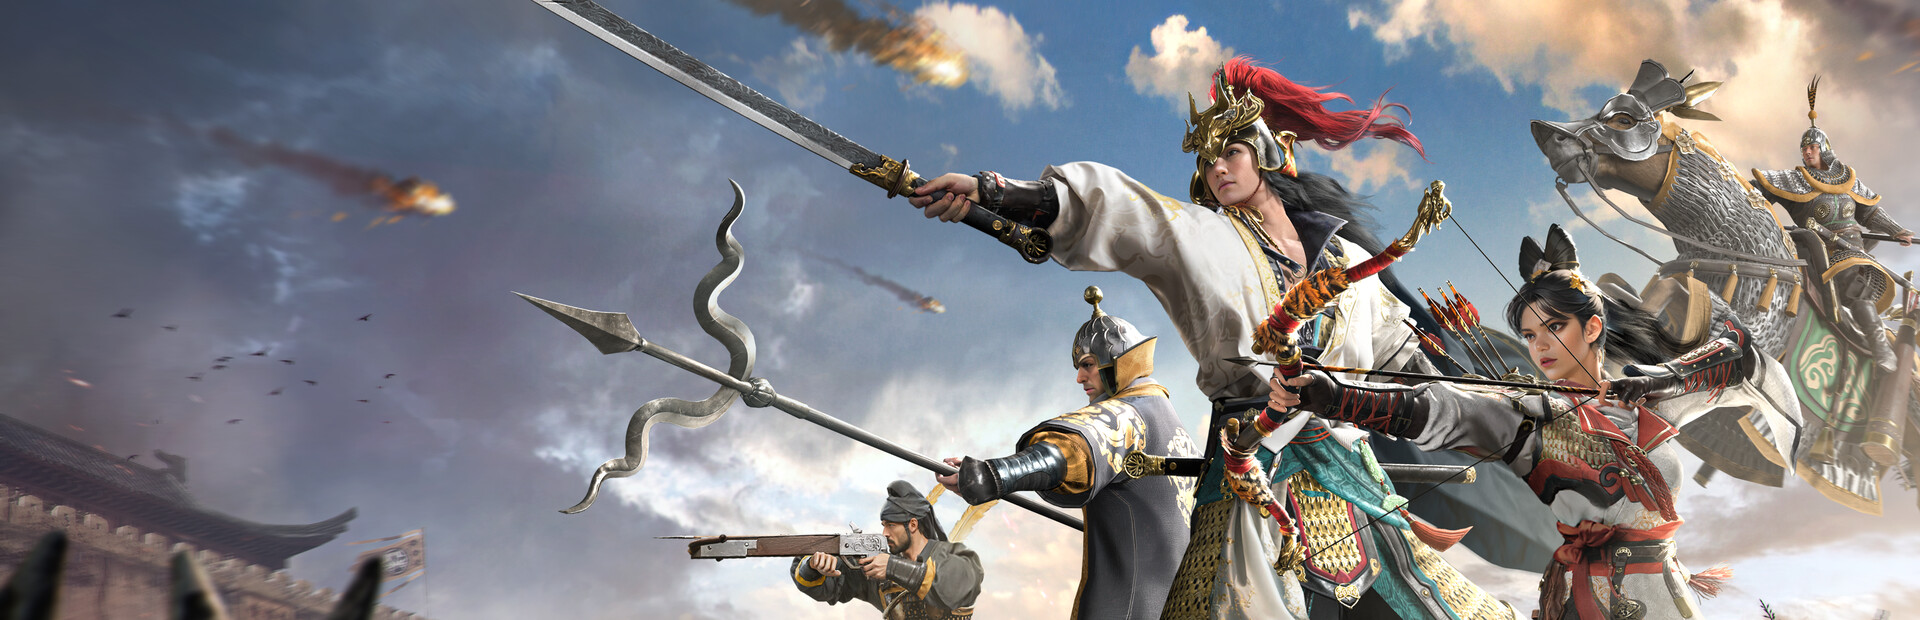 Conqueror's Blade cover image